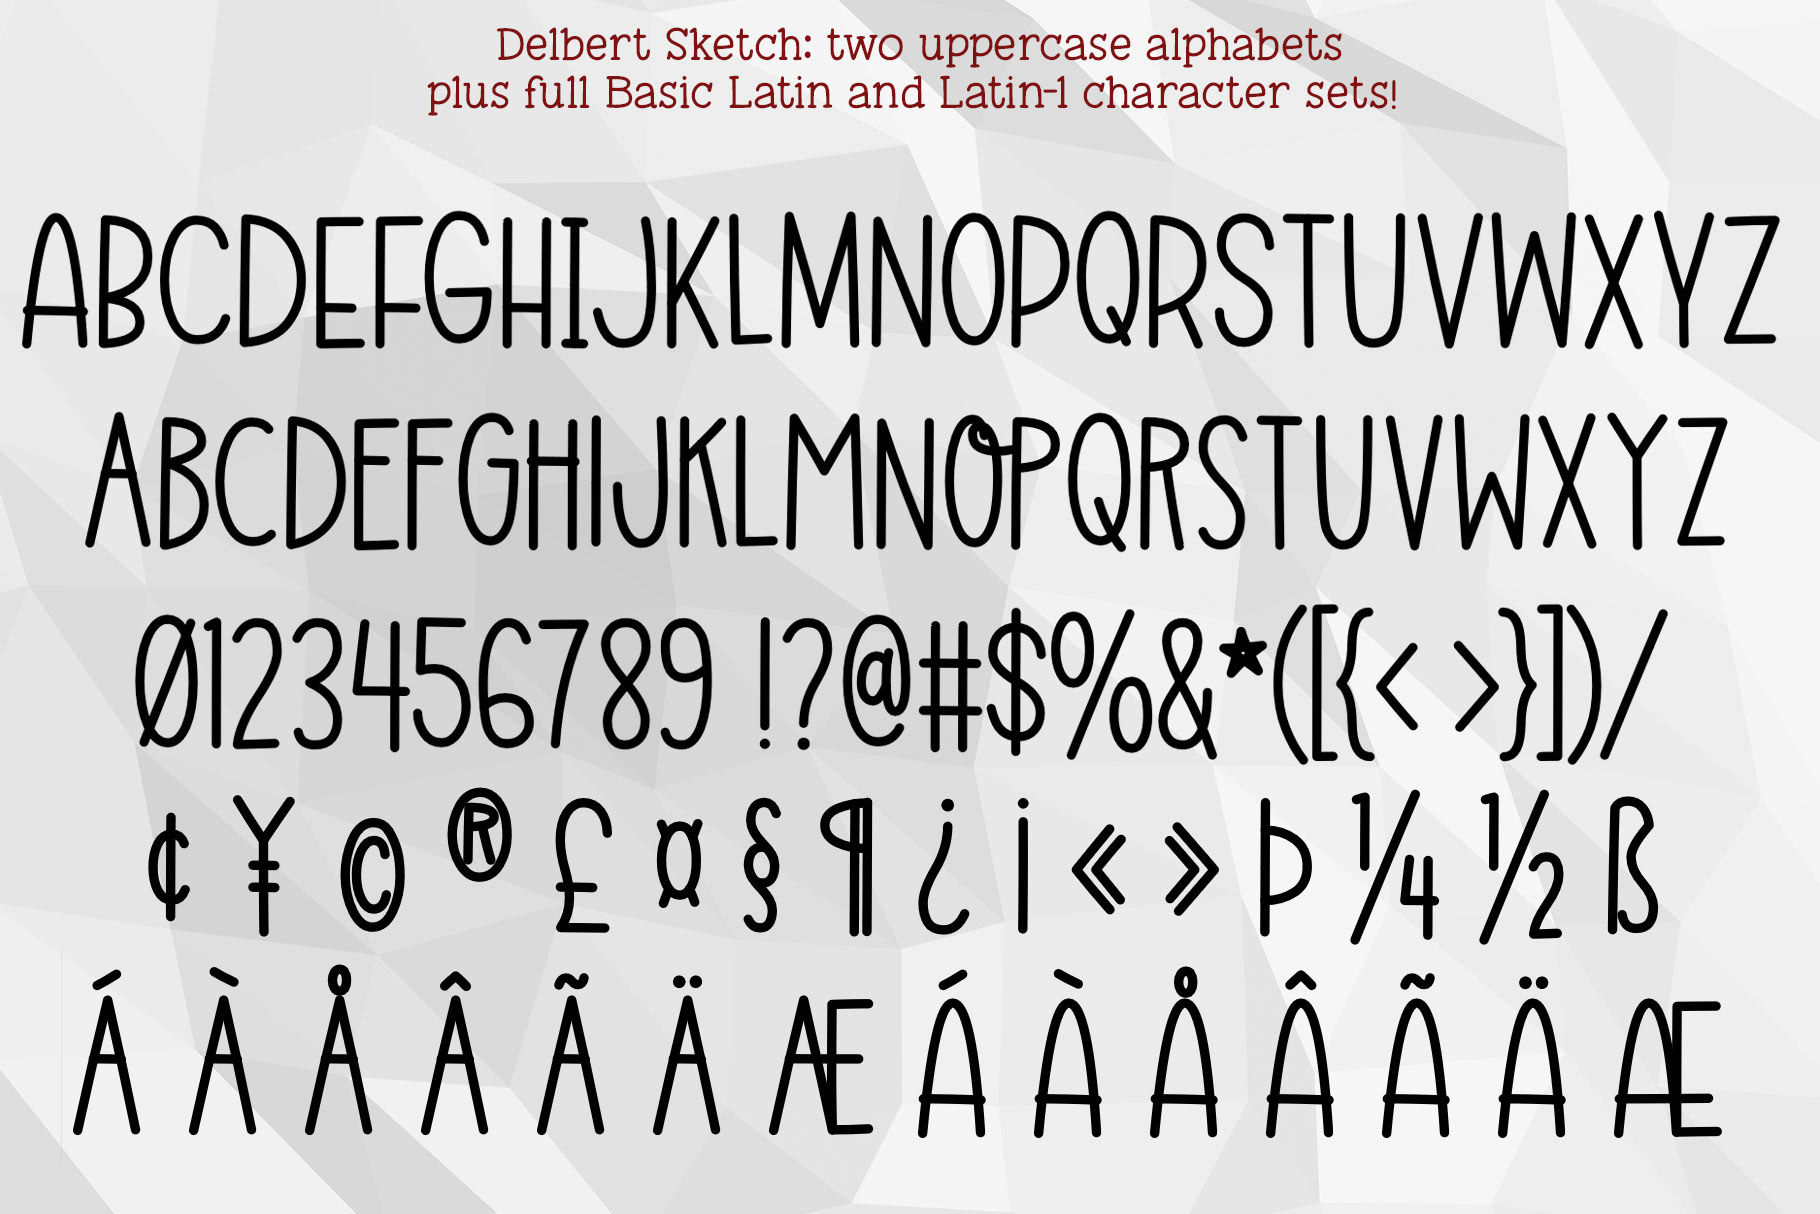 Delbert font sketch pens engraving single line foil quill Typeface missy me...